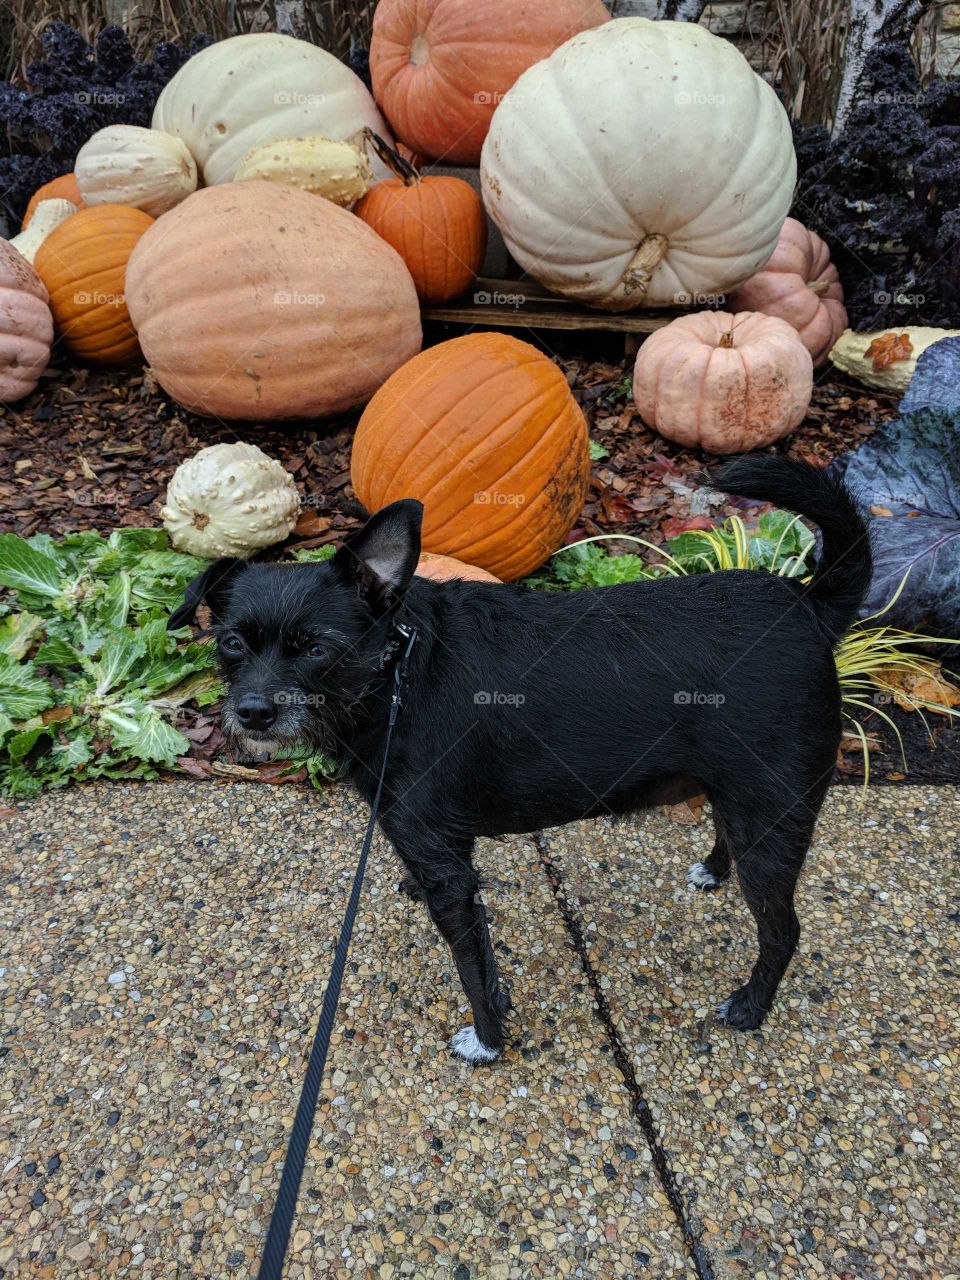 KC visiting the pumpkins